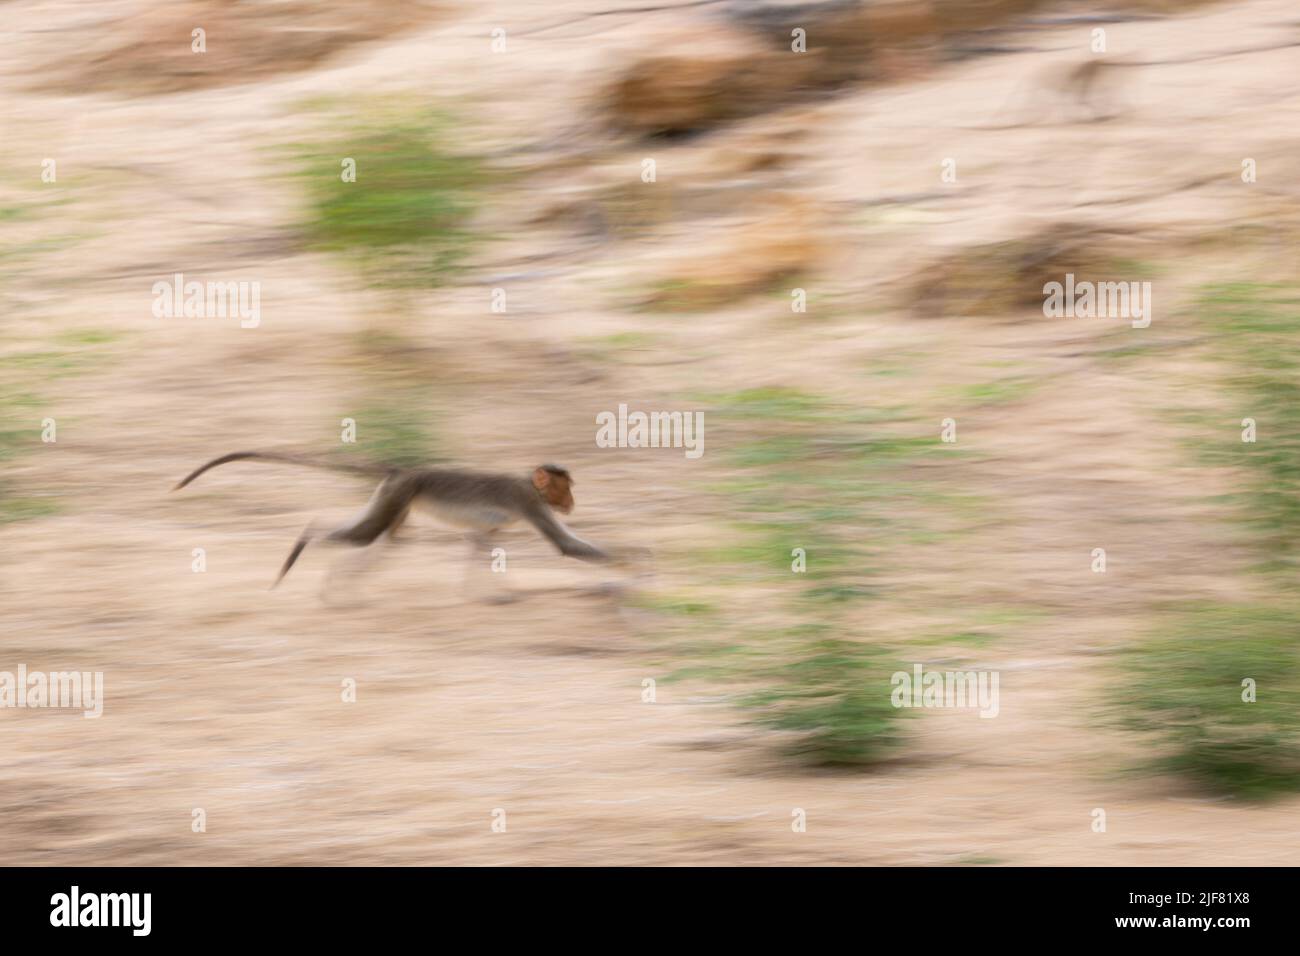 Abstract Image of a Bonnet Macaque Running (Photographed in Bheemeshwari, Karnataka) Stock Photo